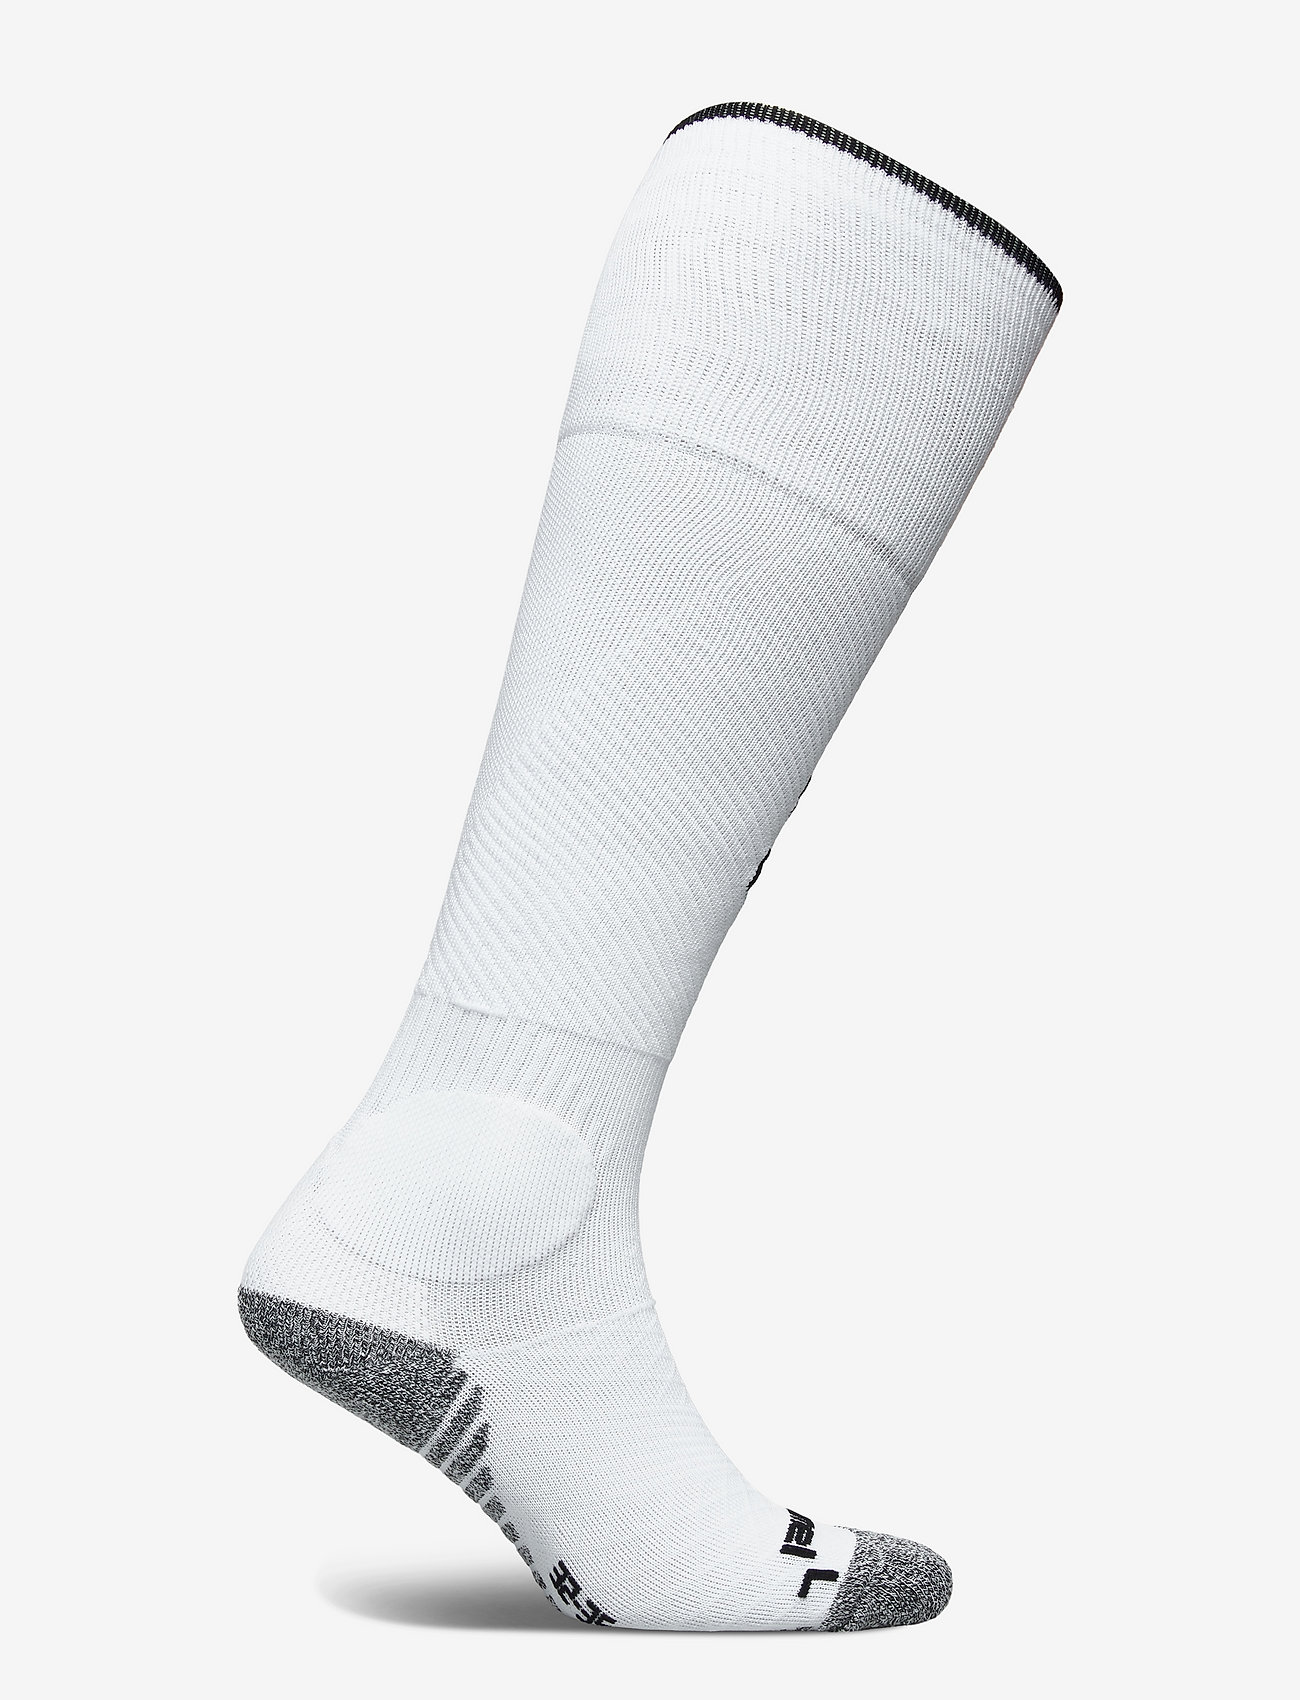 Hummel - PRO FOOTBALL SOCK 17 - 18 - clothes - white/black - 1